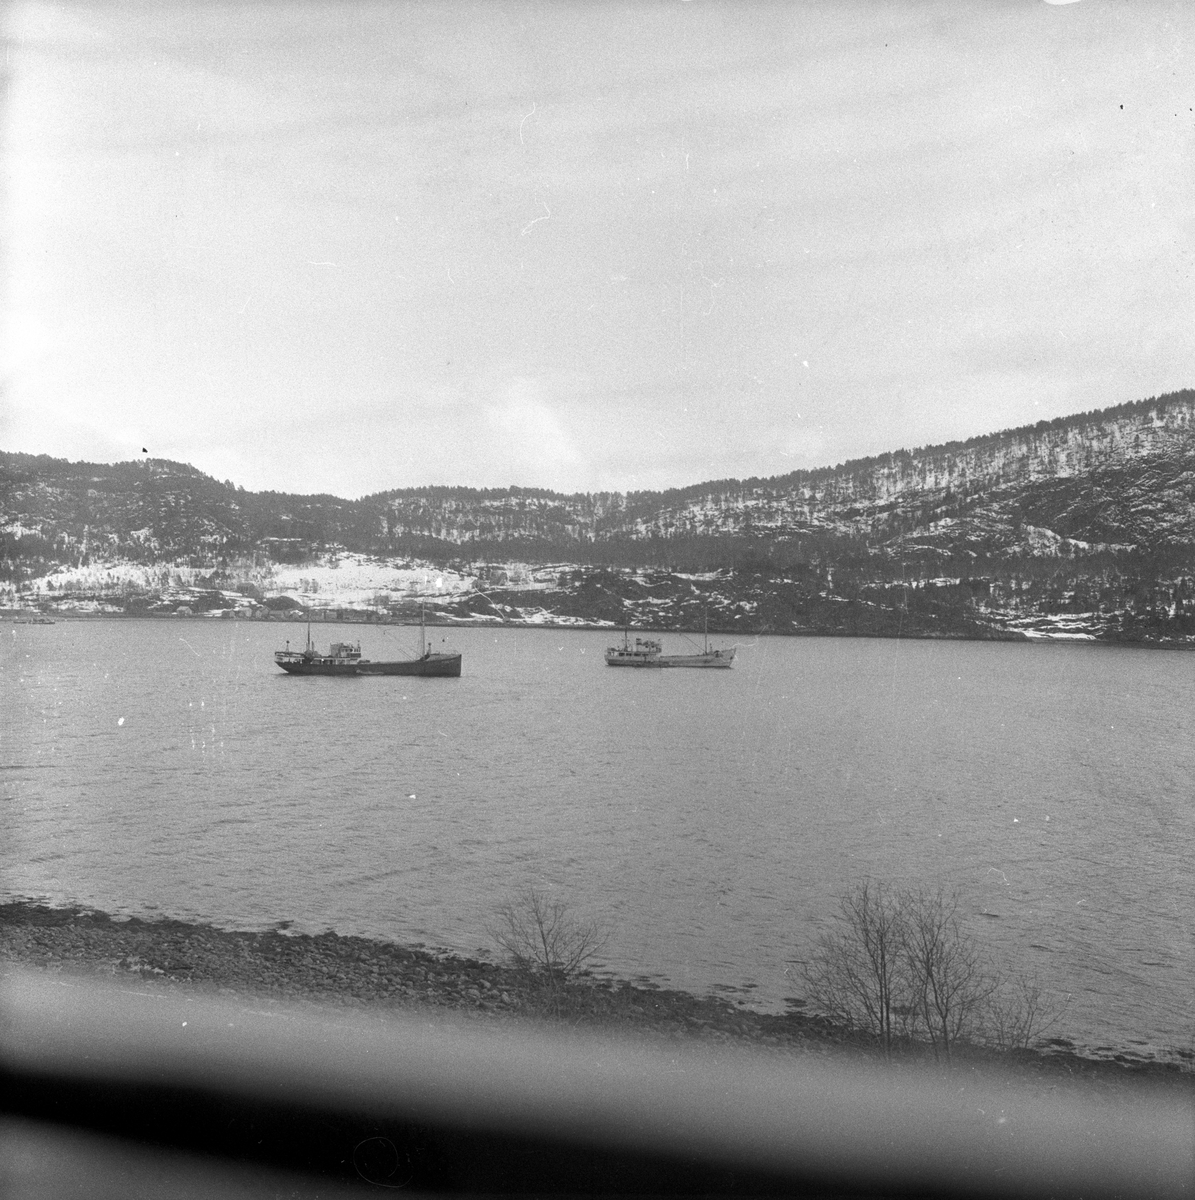 Skip på fjord i området mellom Ålesund og Åndalsnes. Fotografert 14. april 1956.